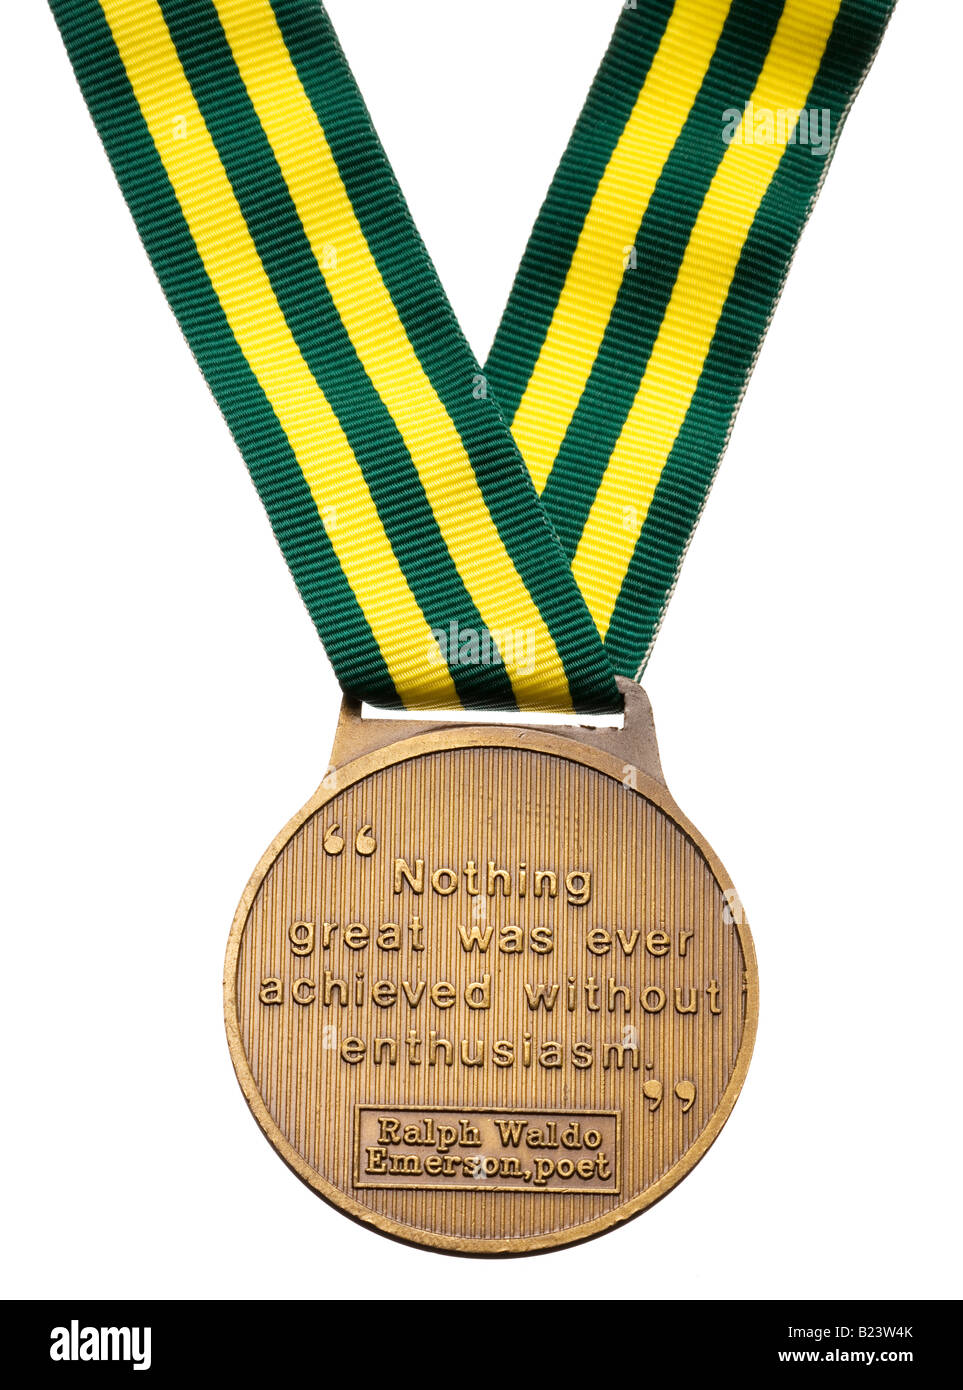 London marathon medal 1996 Stock Photo